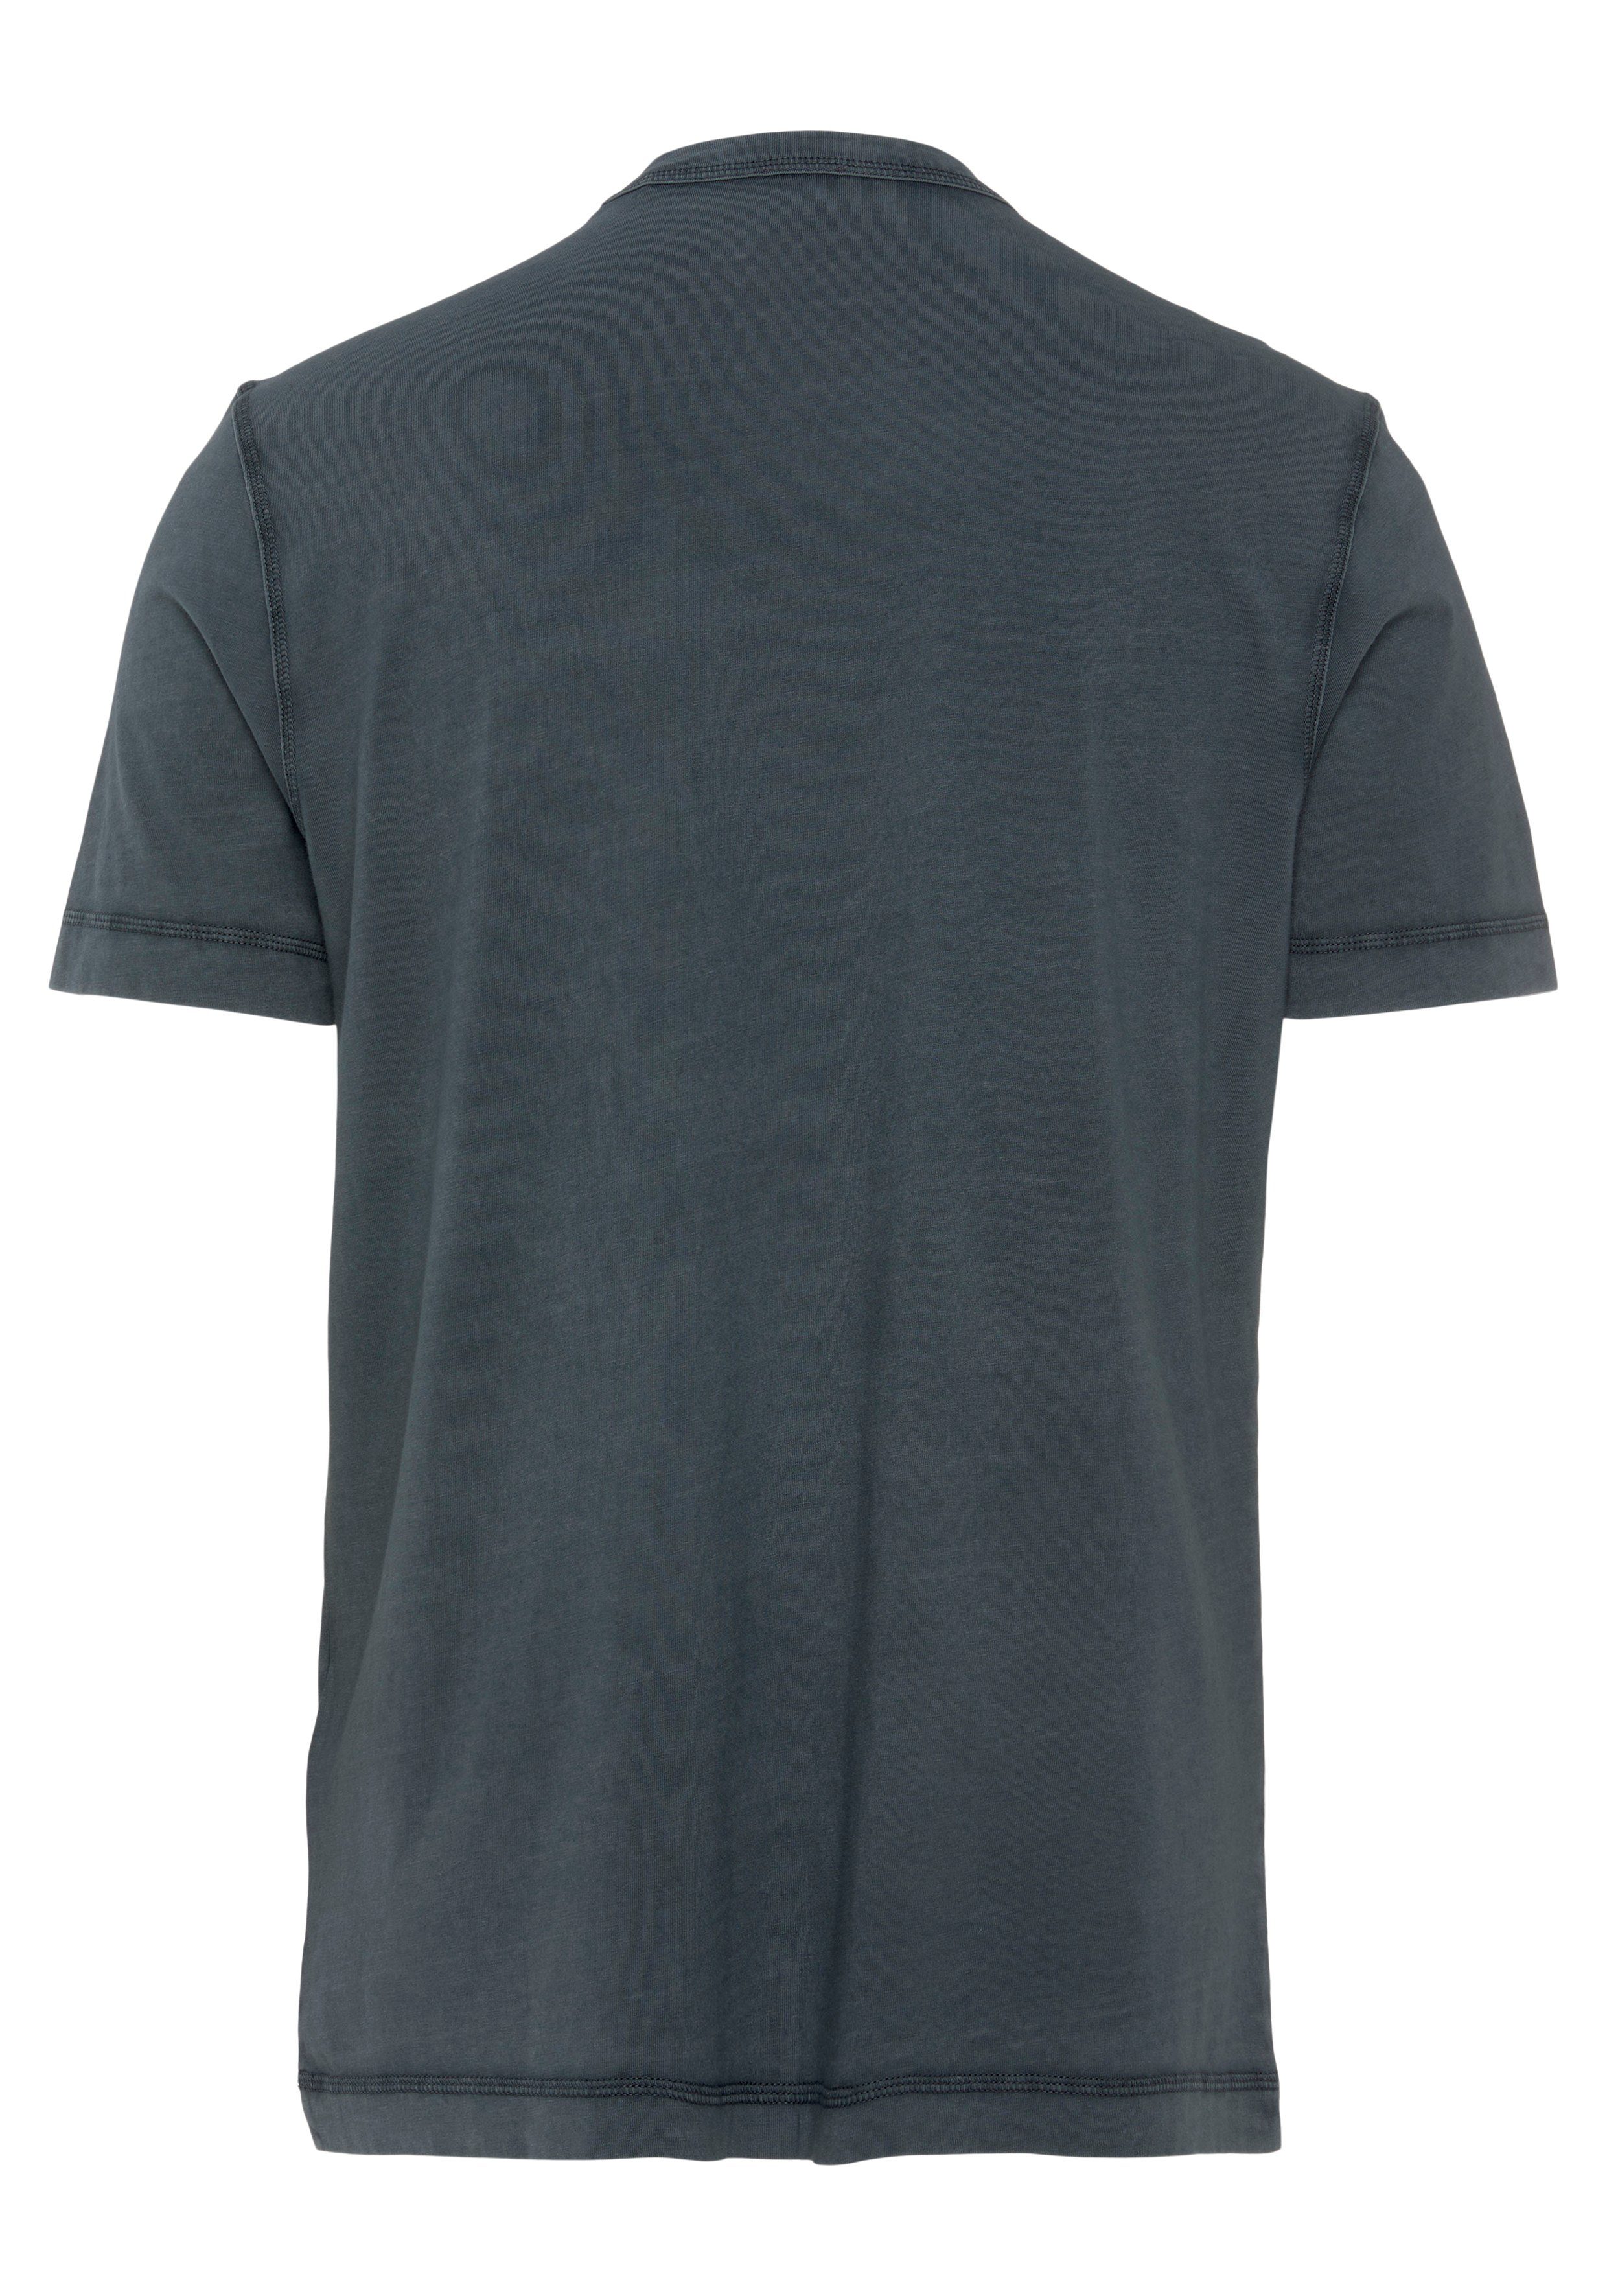 Tokks Green388 T-Shirt Markenlabel Open mit BOSS ORANGE ORANGE BOSS